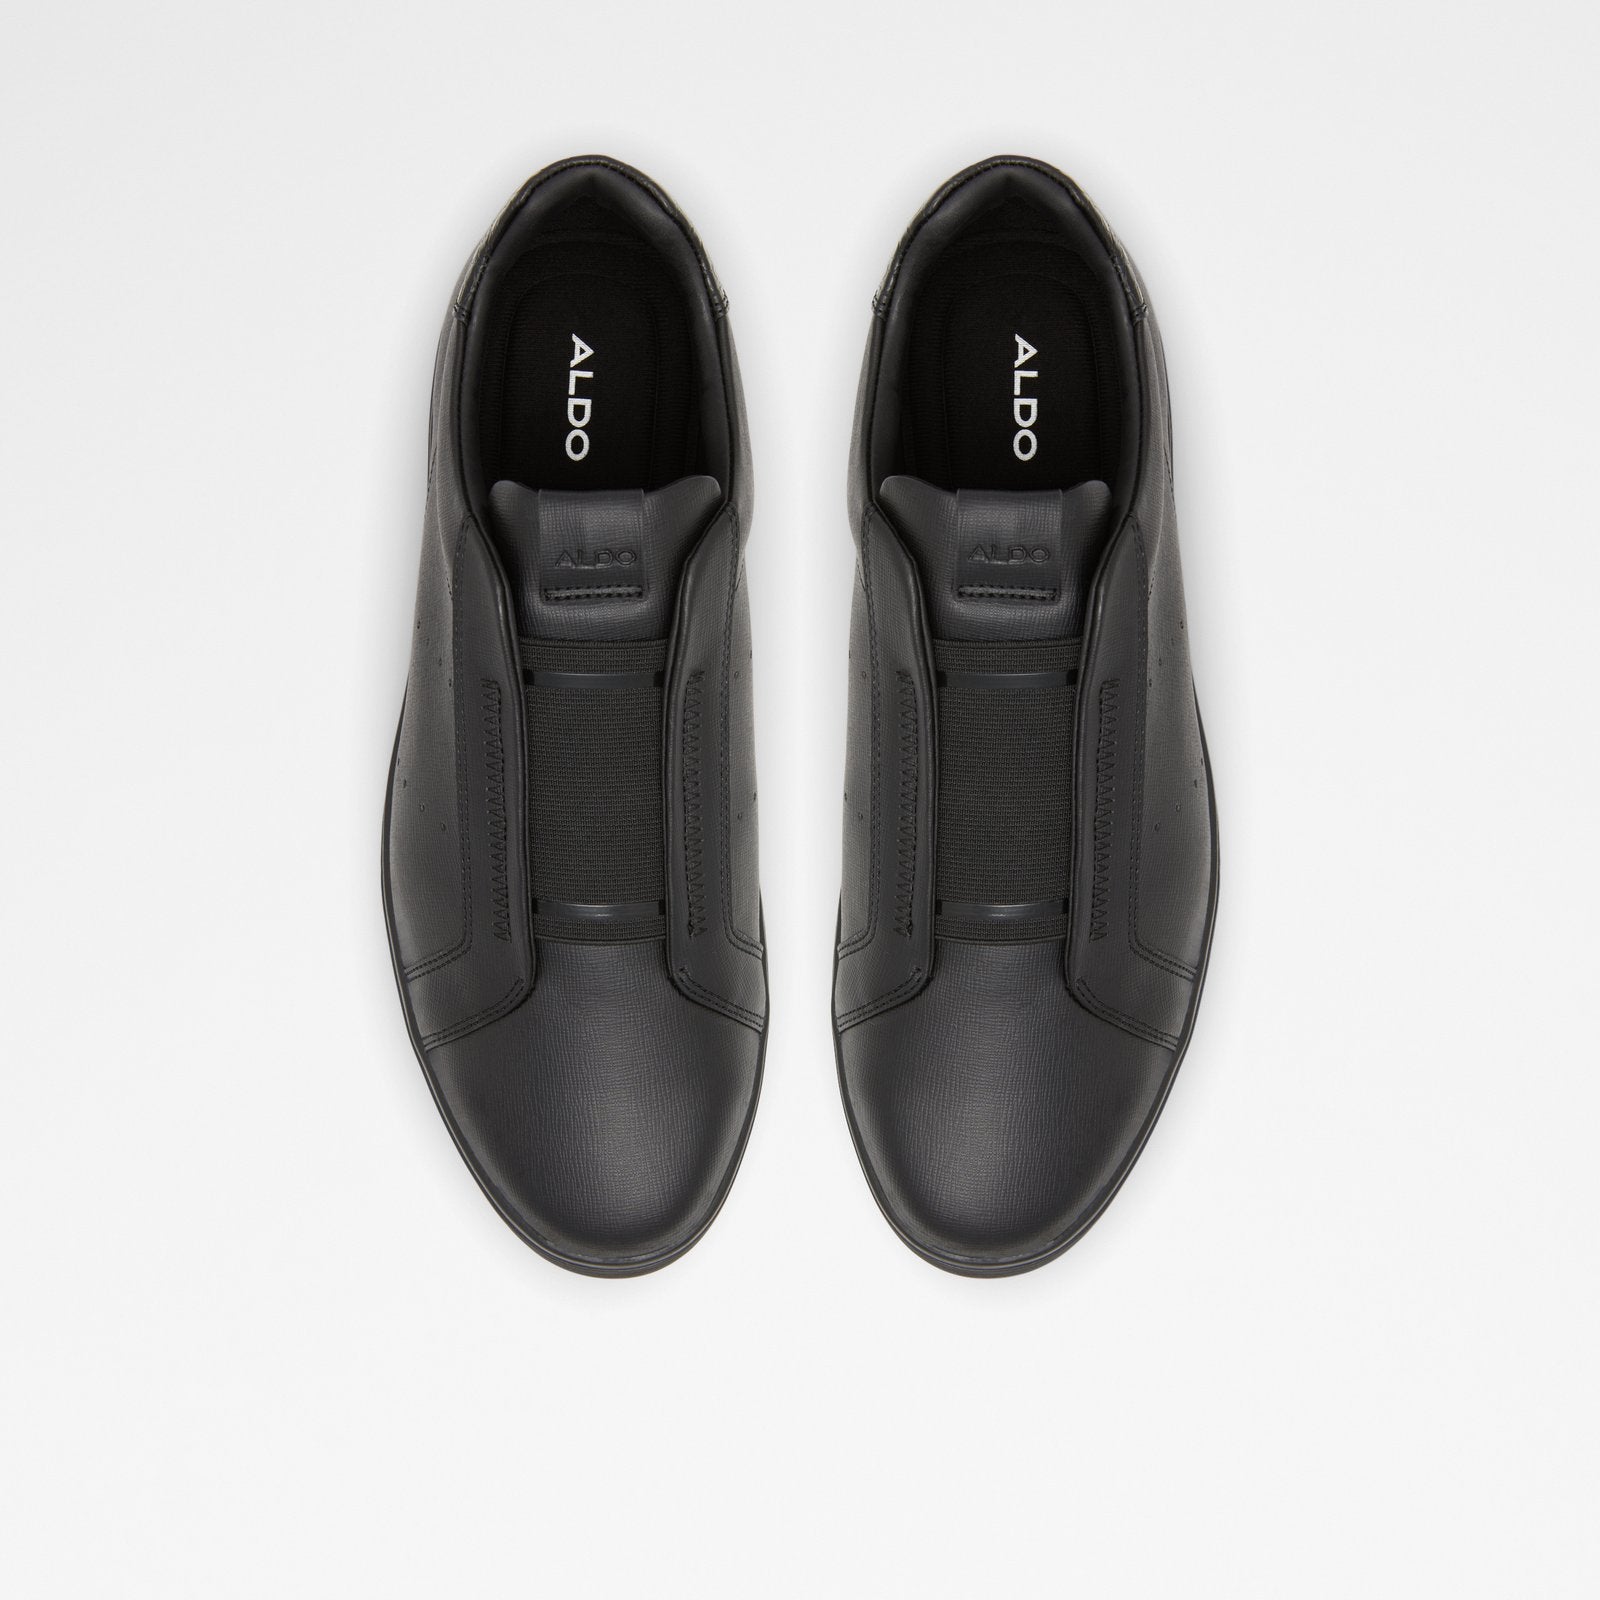 Boomerangg Men Shoes - Black - ALDO KSA